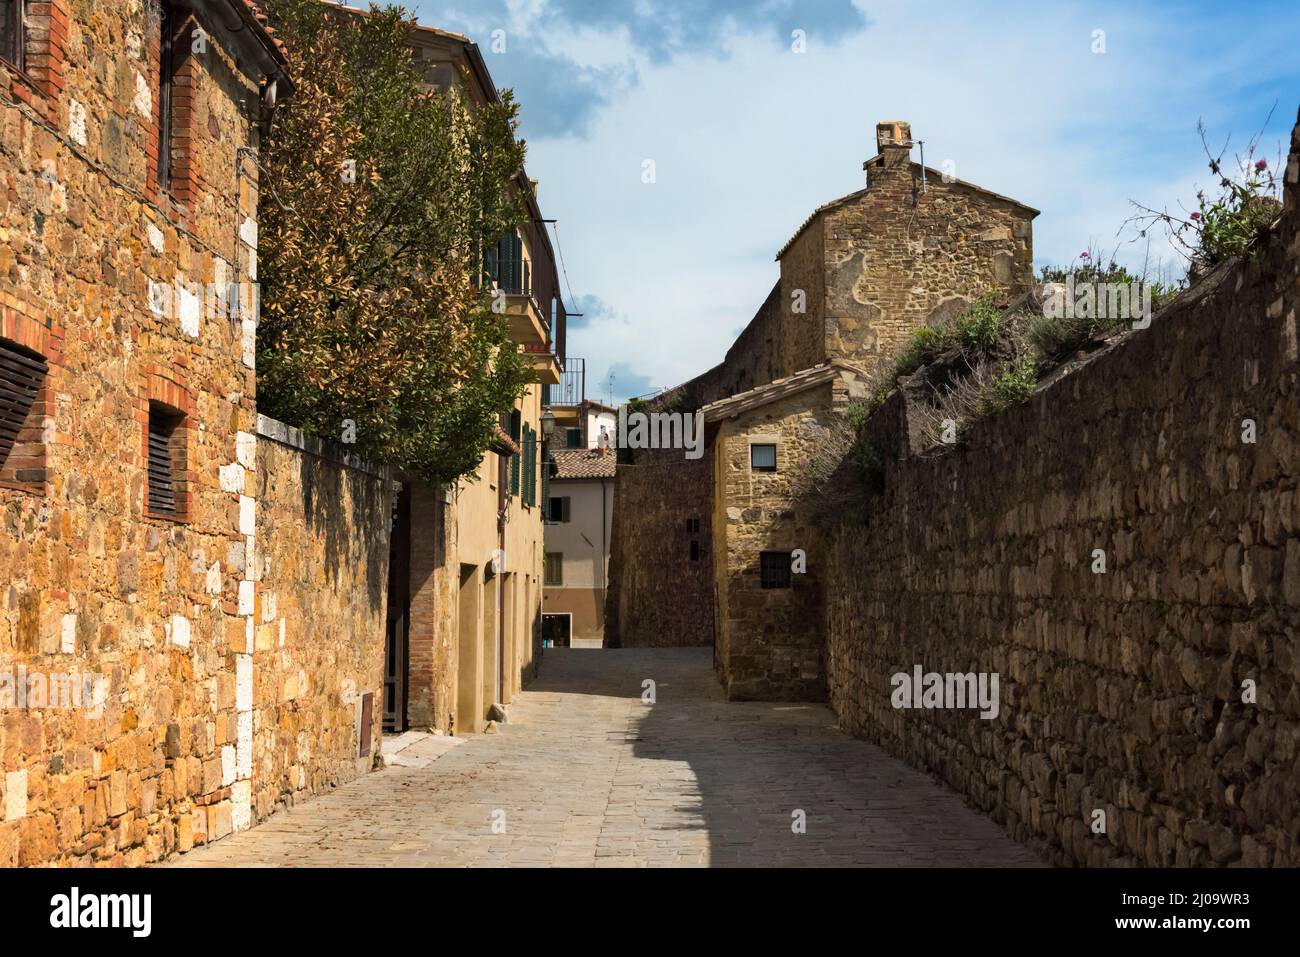 Historic town of San Quirico d'Orcia, Siena Province, Tuscany Region, Italy Stock Photo